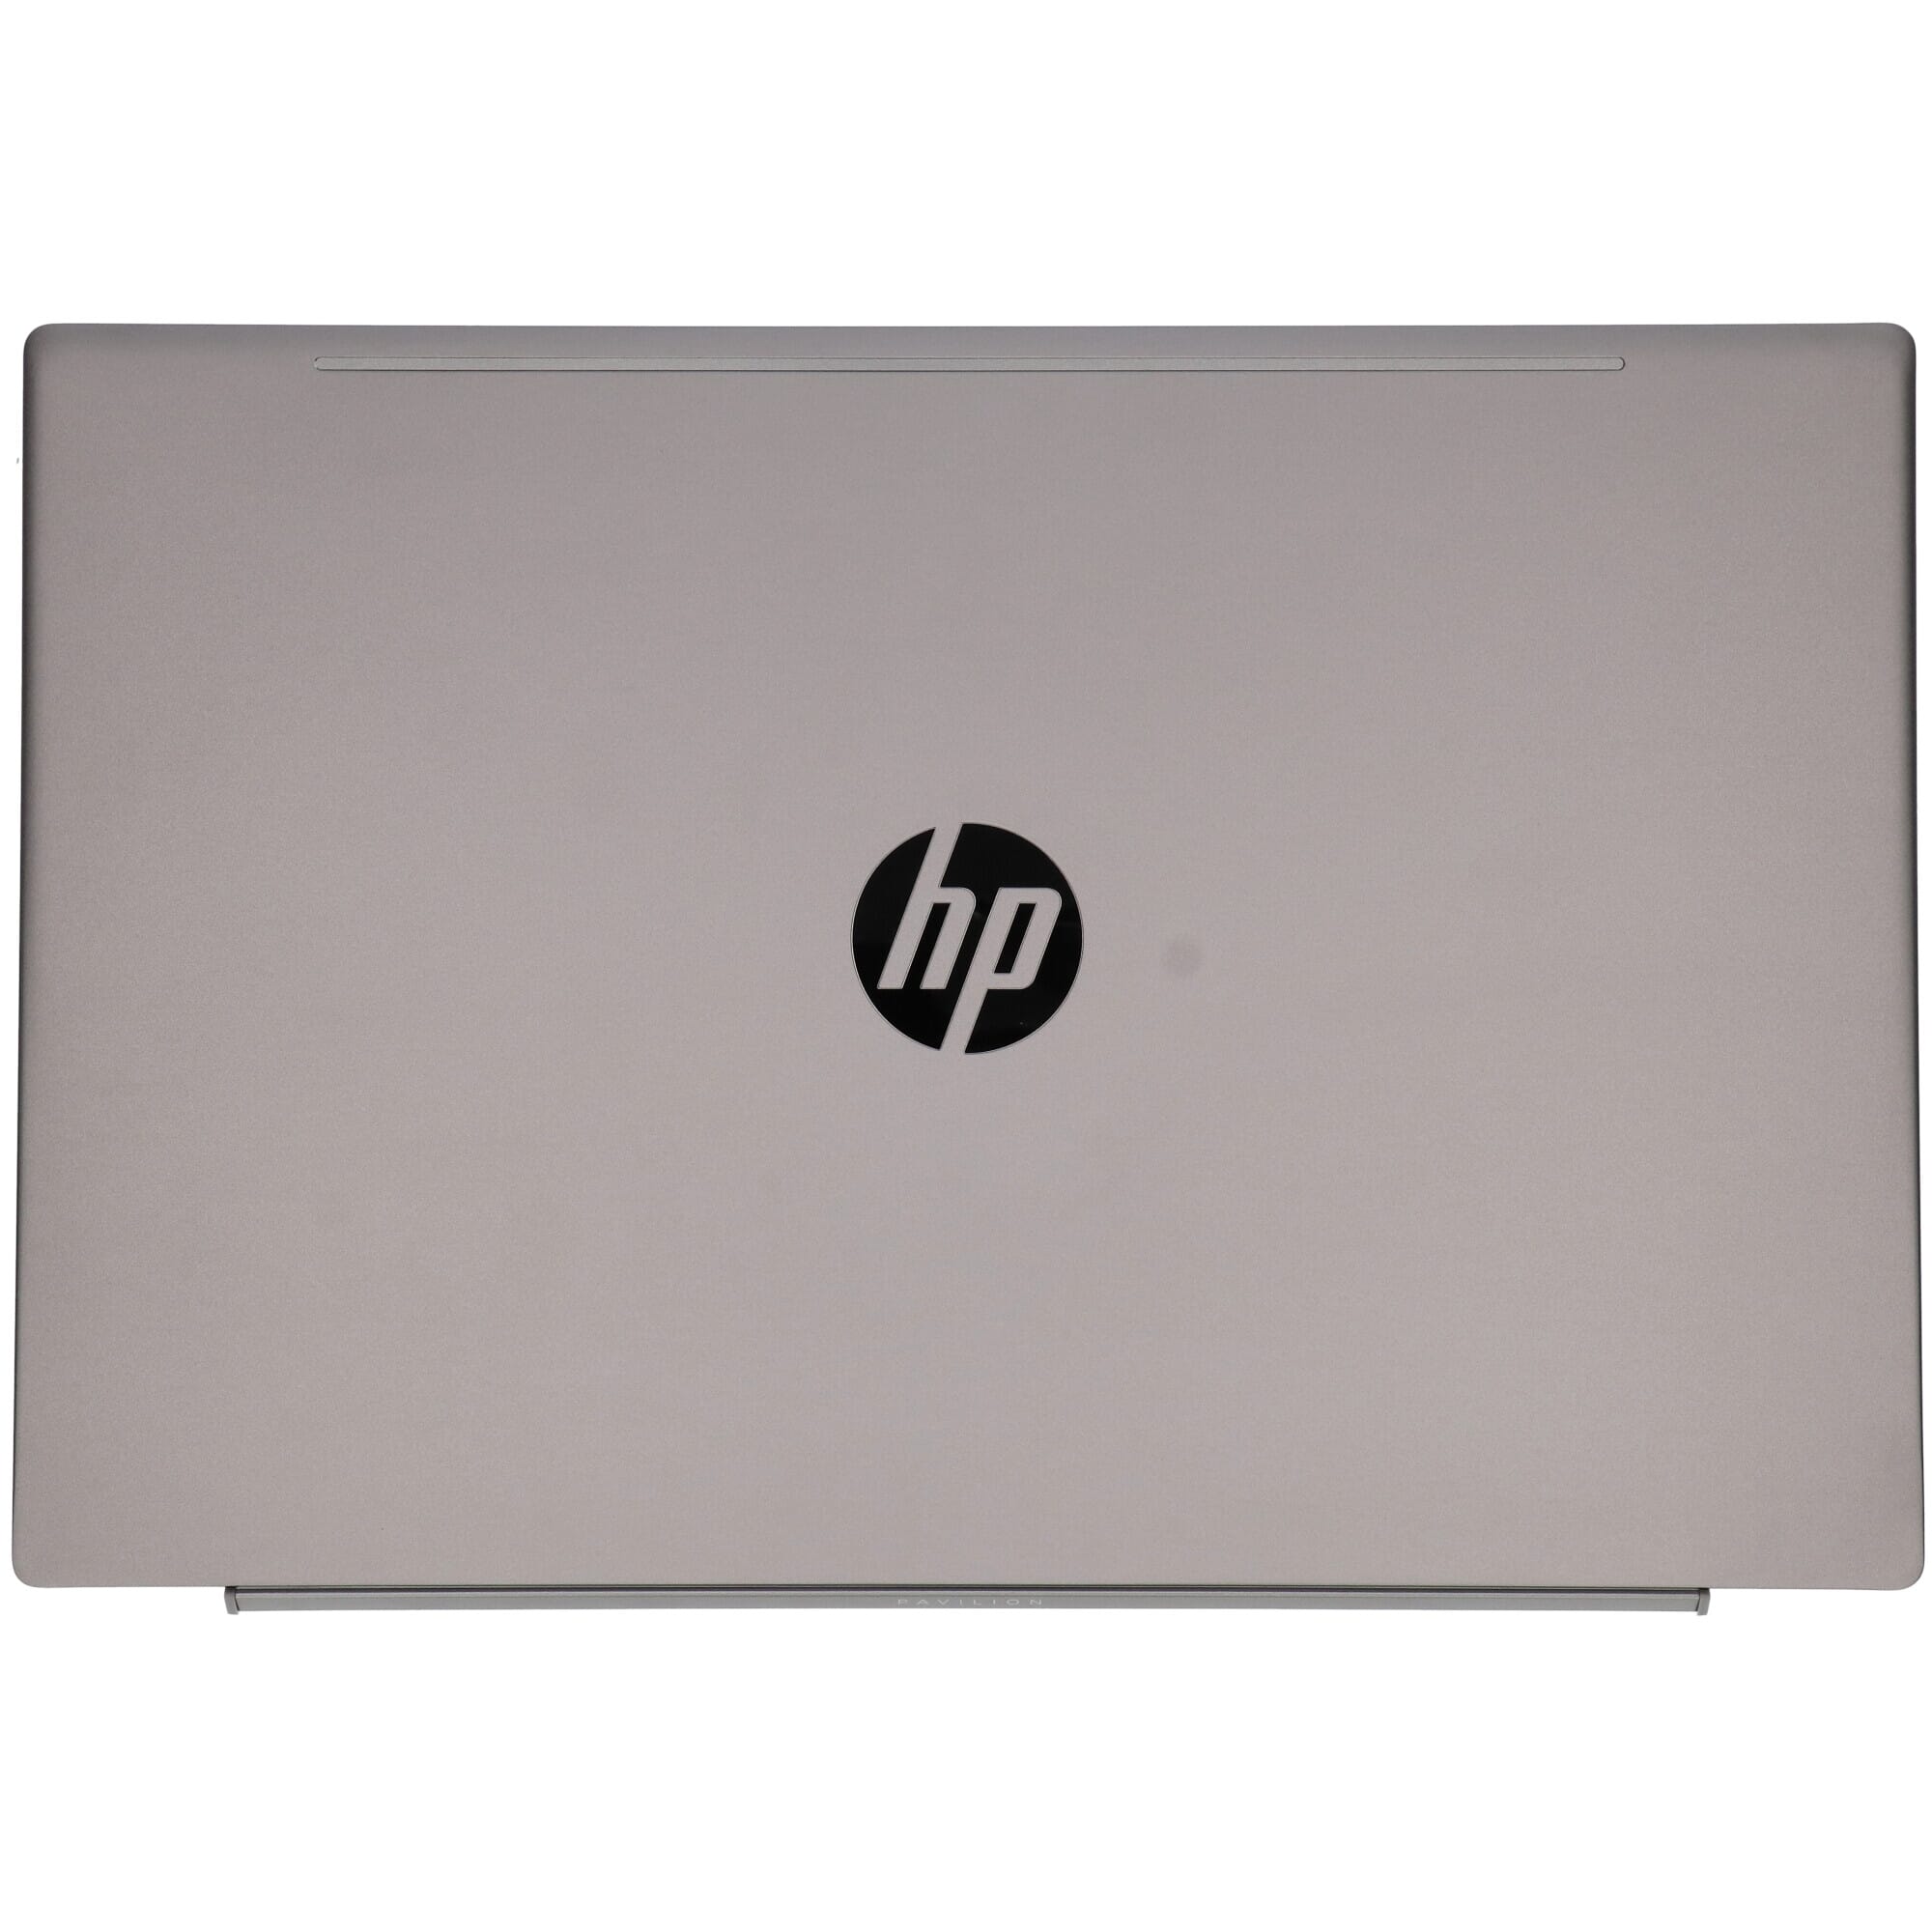 HP Laptop LCD Back Cover Zilver 220/250nits Modellen